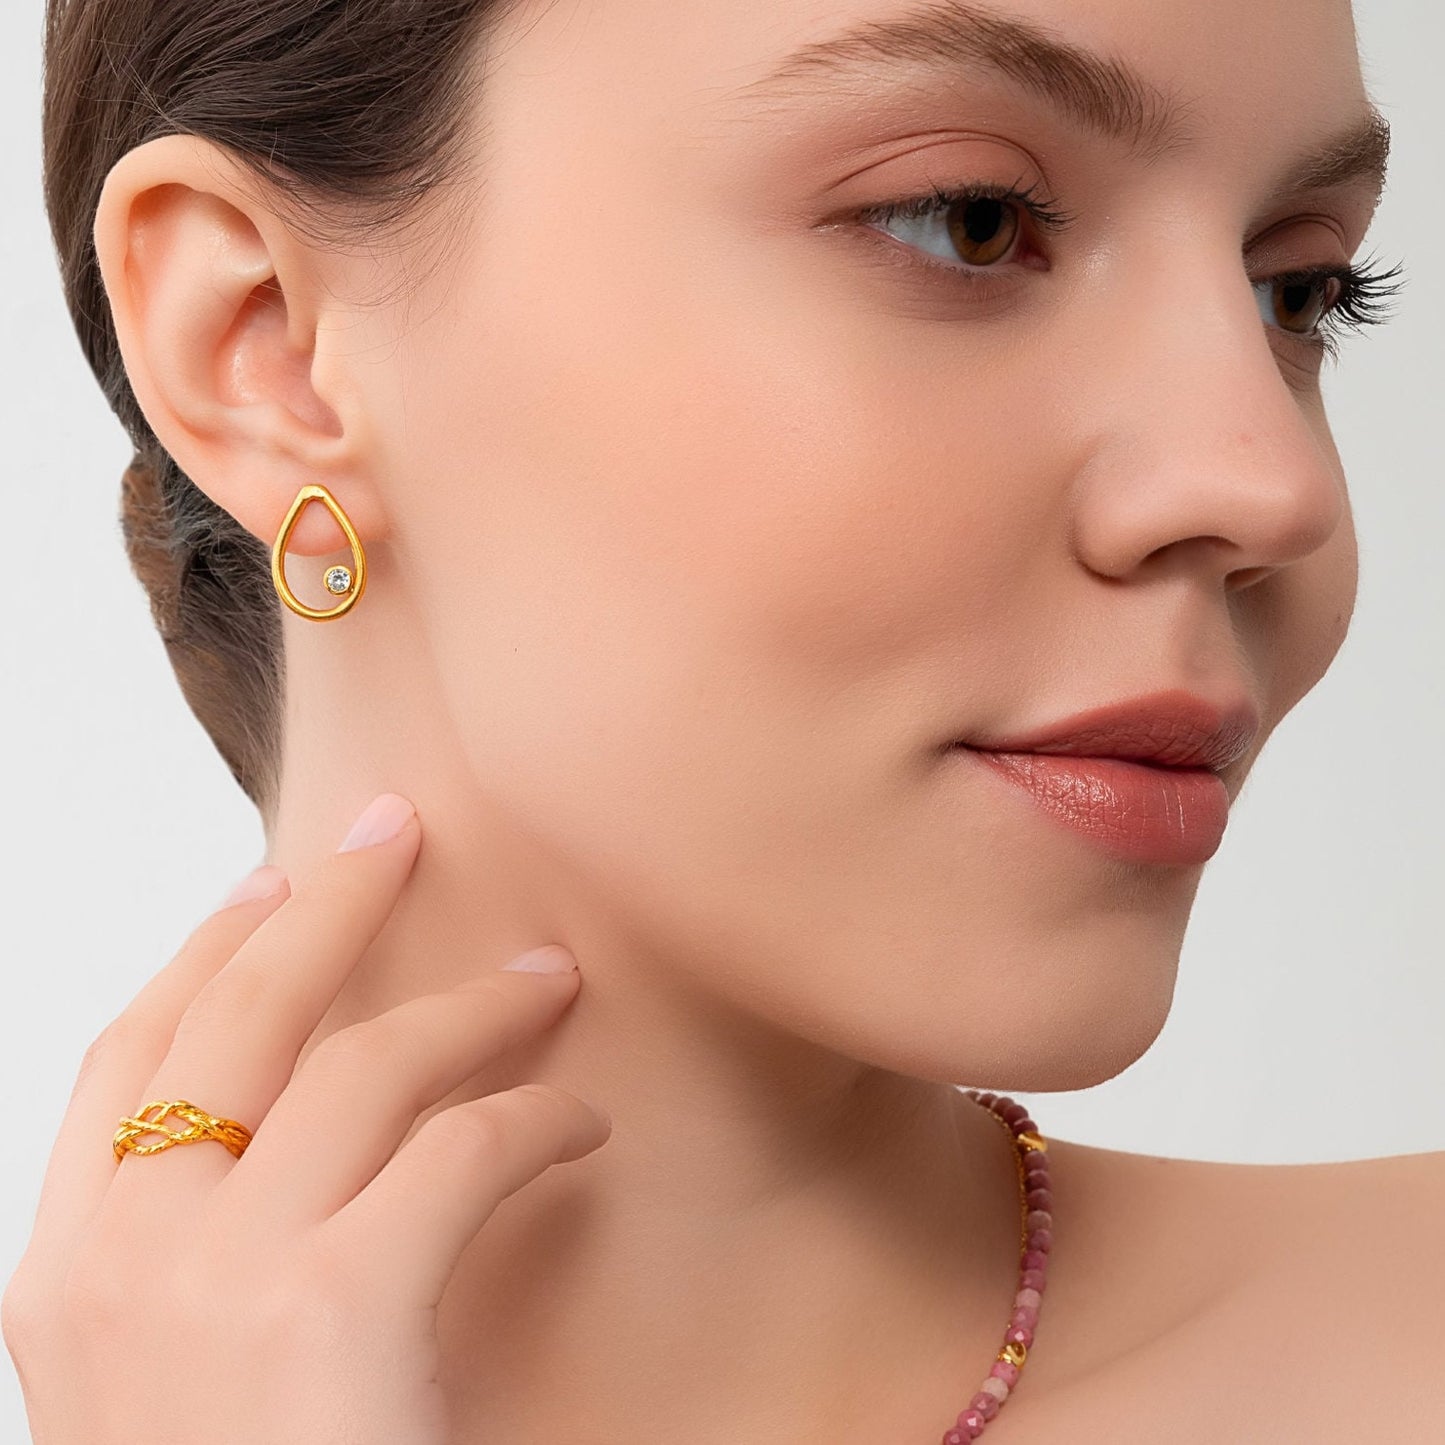 Gold Tear Drop Stud Earrings with Cubic Zirconia